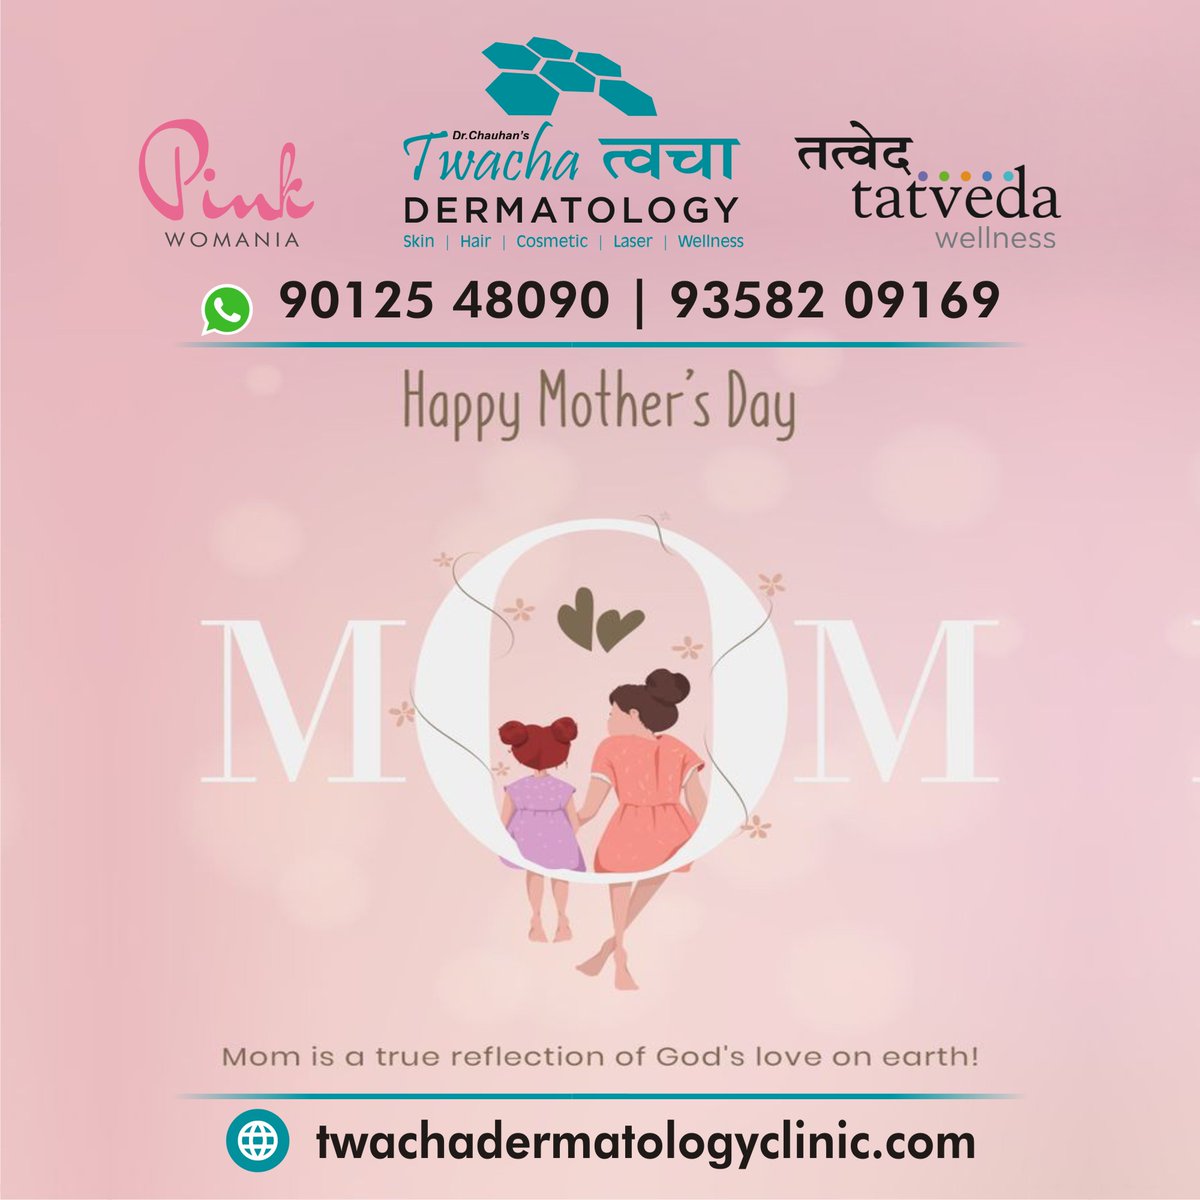 #mothersday #mothersdaygift #love #happymothersday #mom #mother #family #motherhood #momlife #mothers #mothersdaygifts #mama